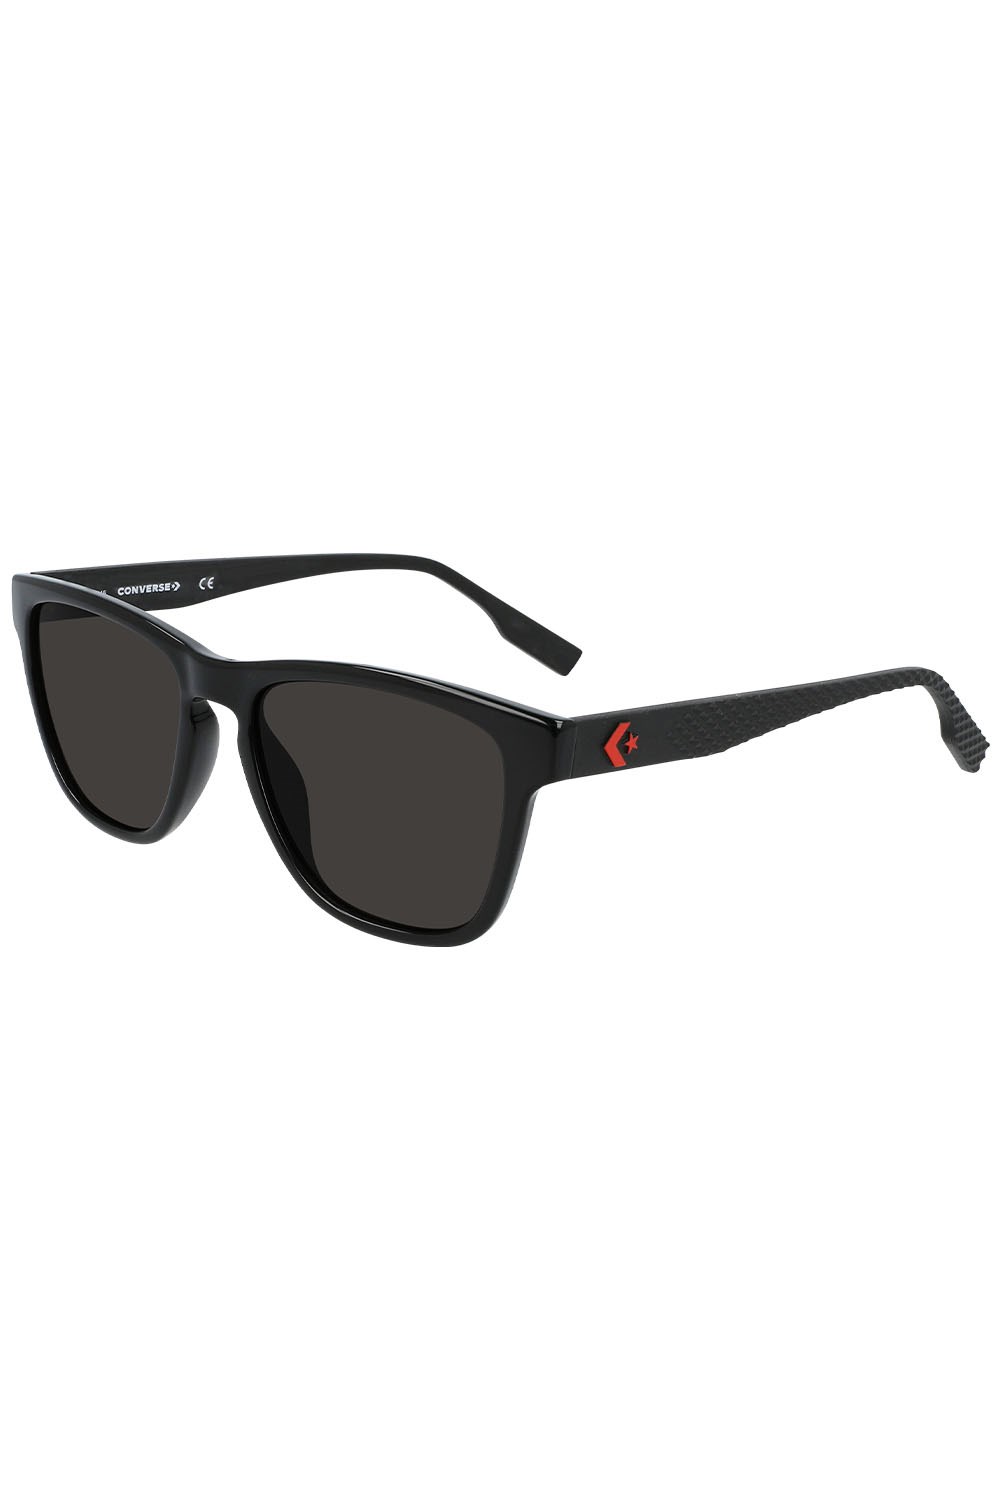 Force Unisex Sunglasses -